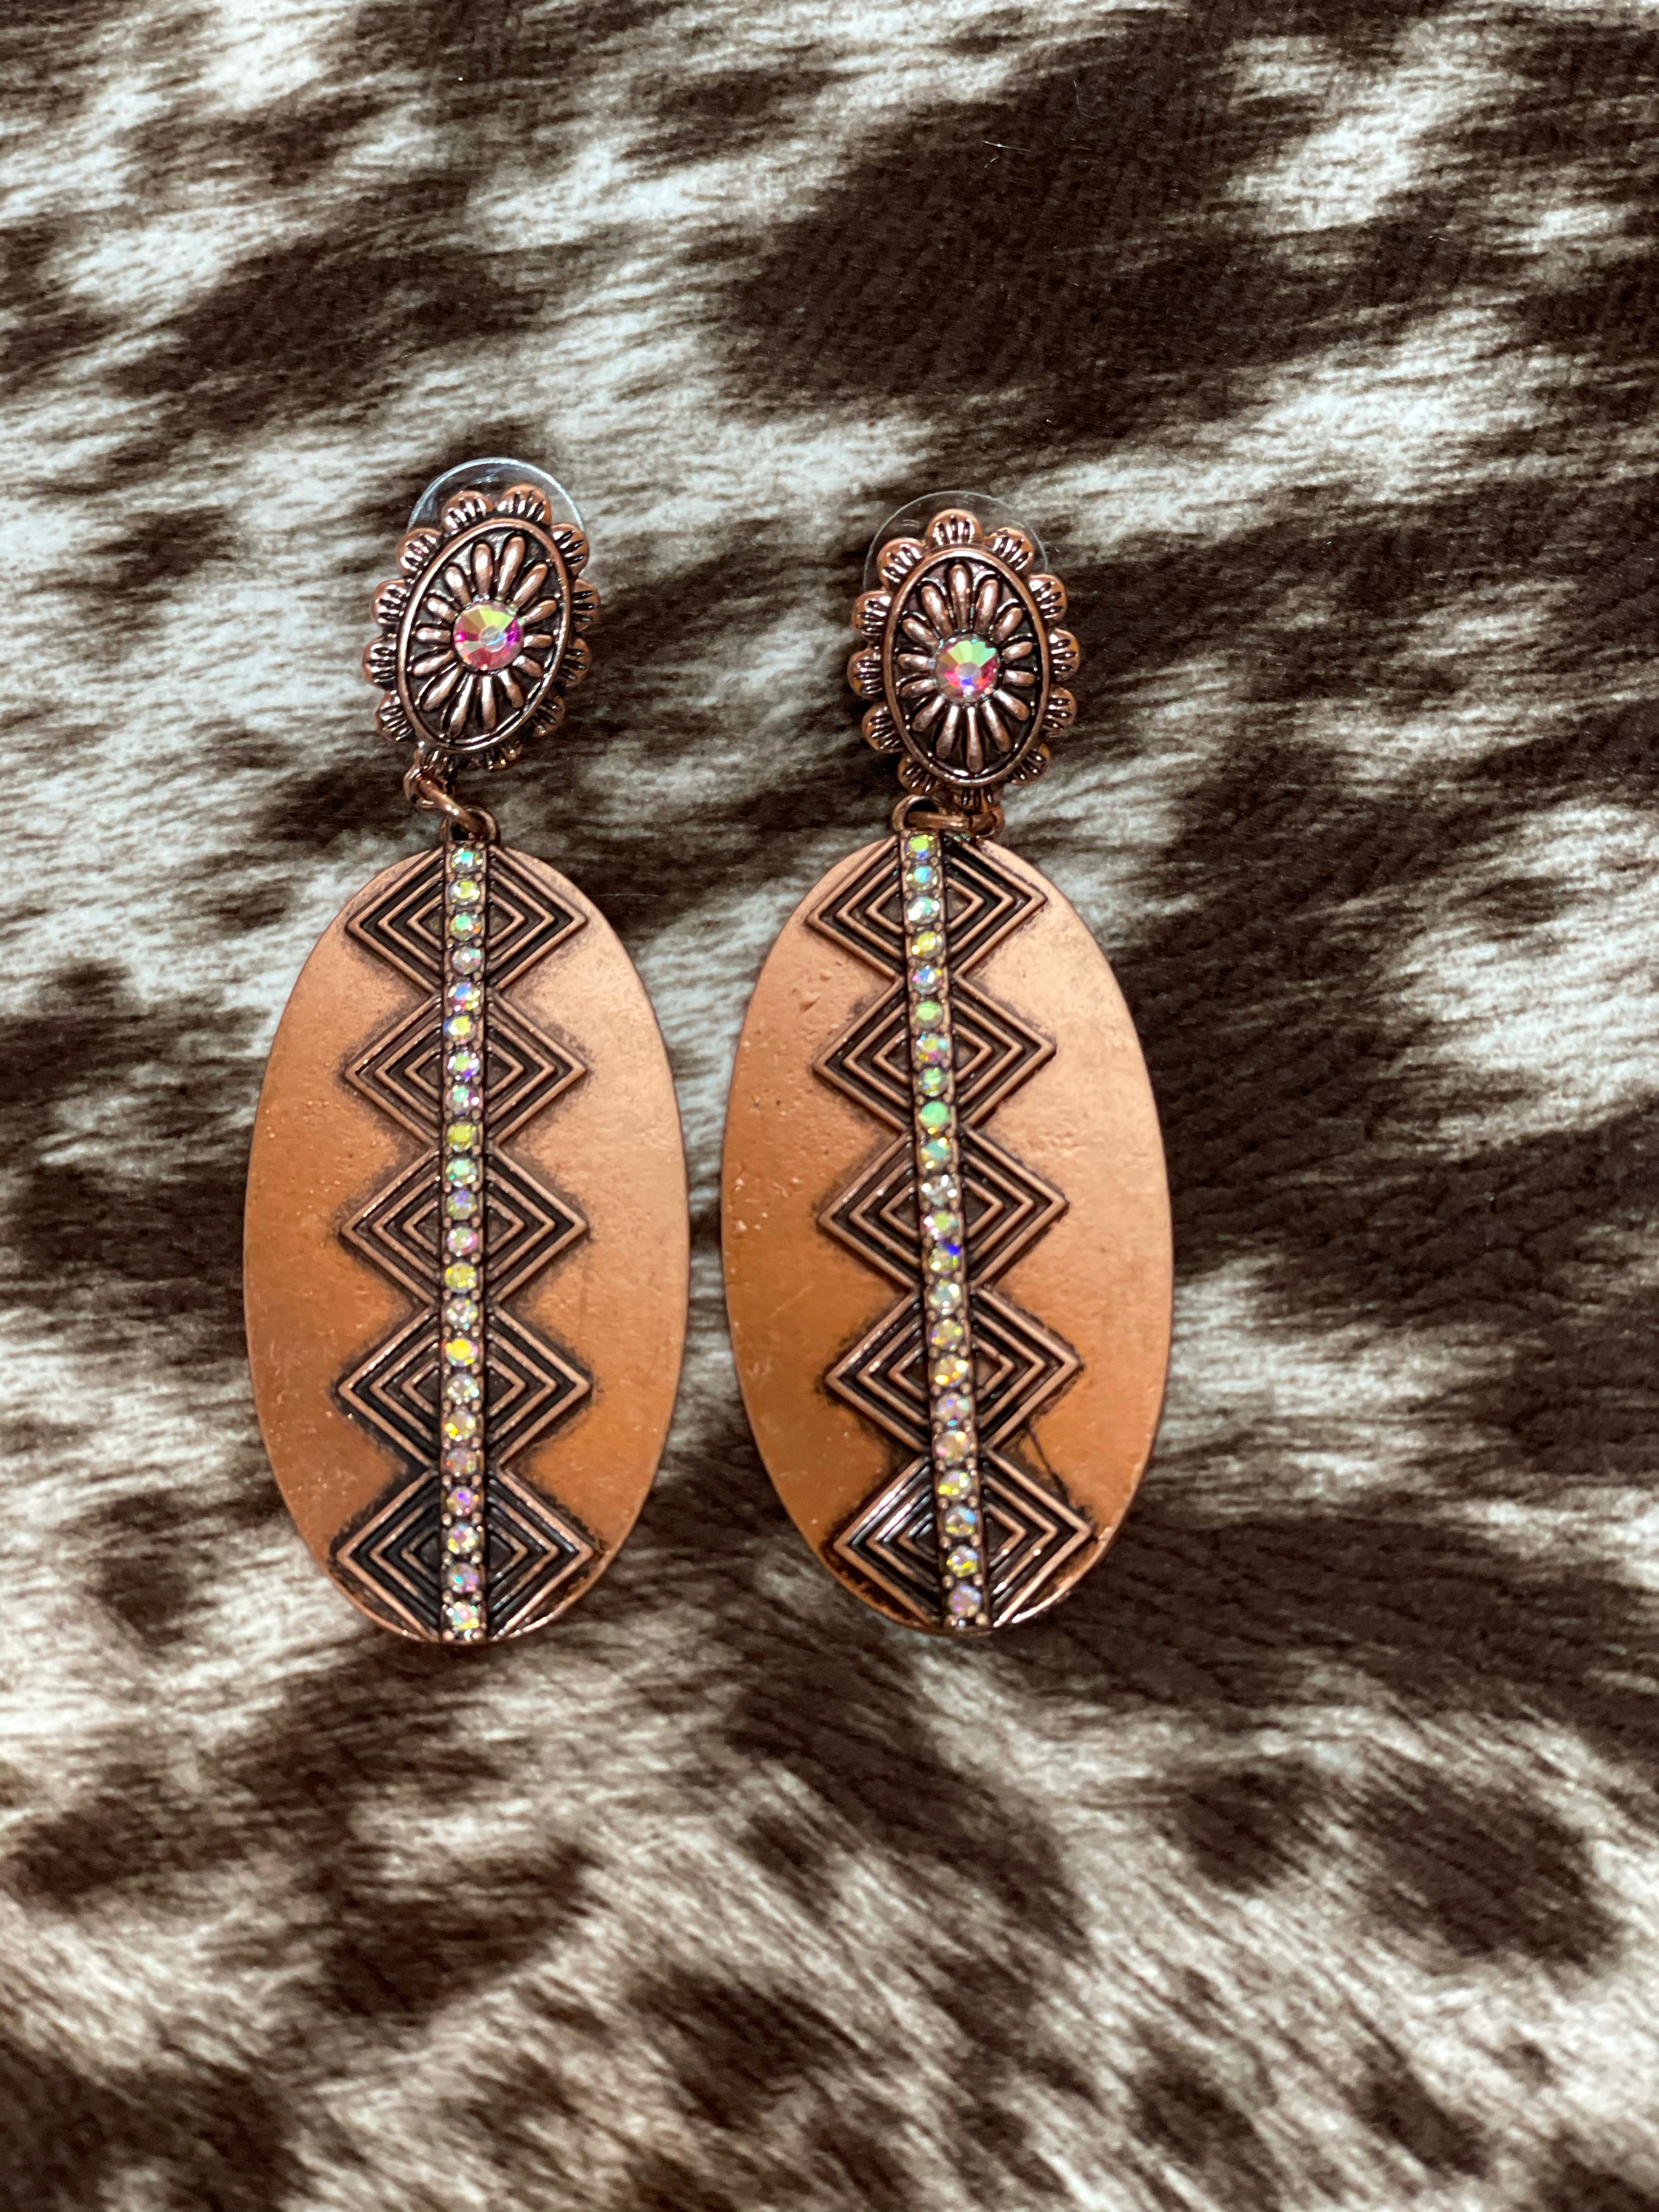 Texas Rhinestone Earrings in Bronze